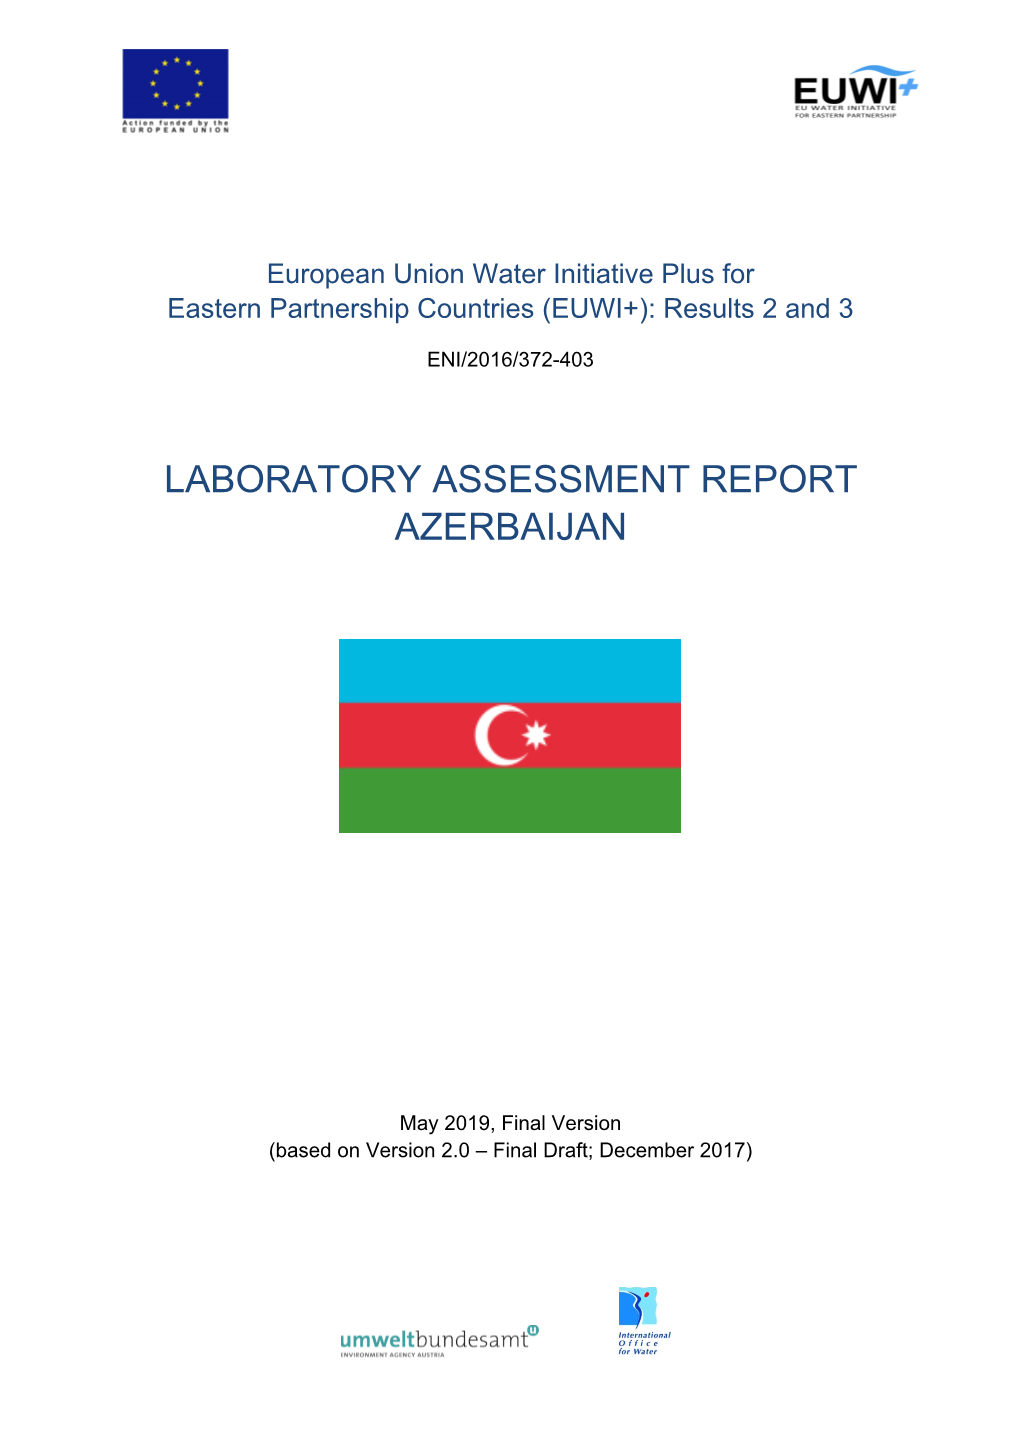 Laboratory Assessment Report Azerbaijan